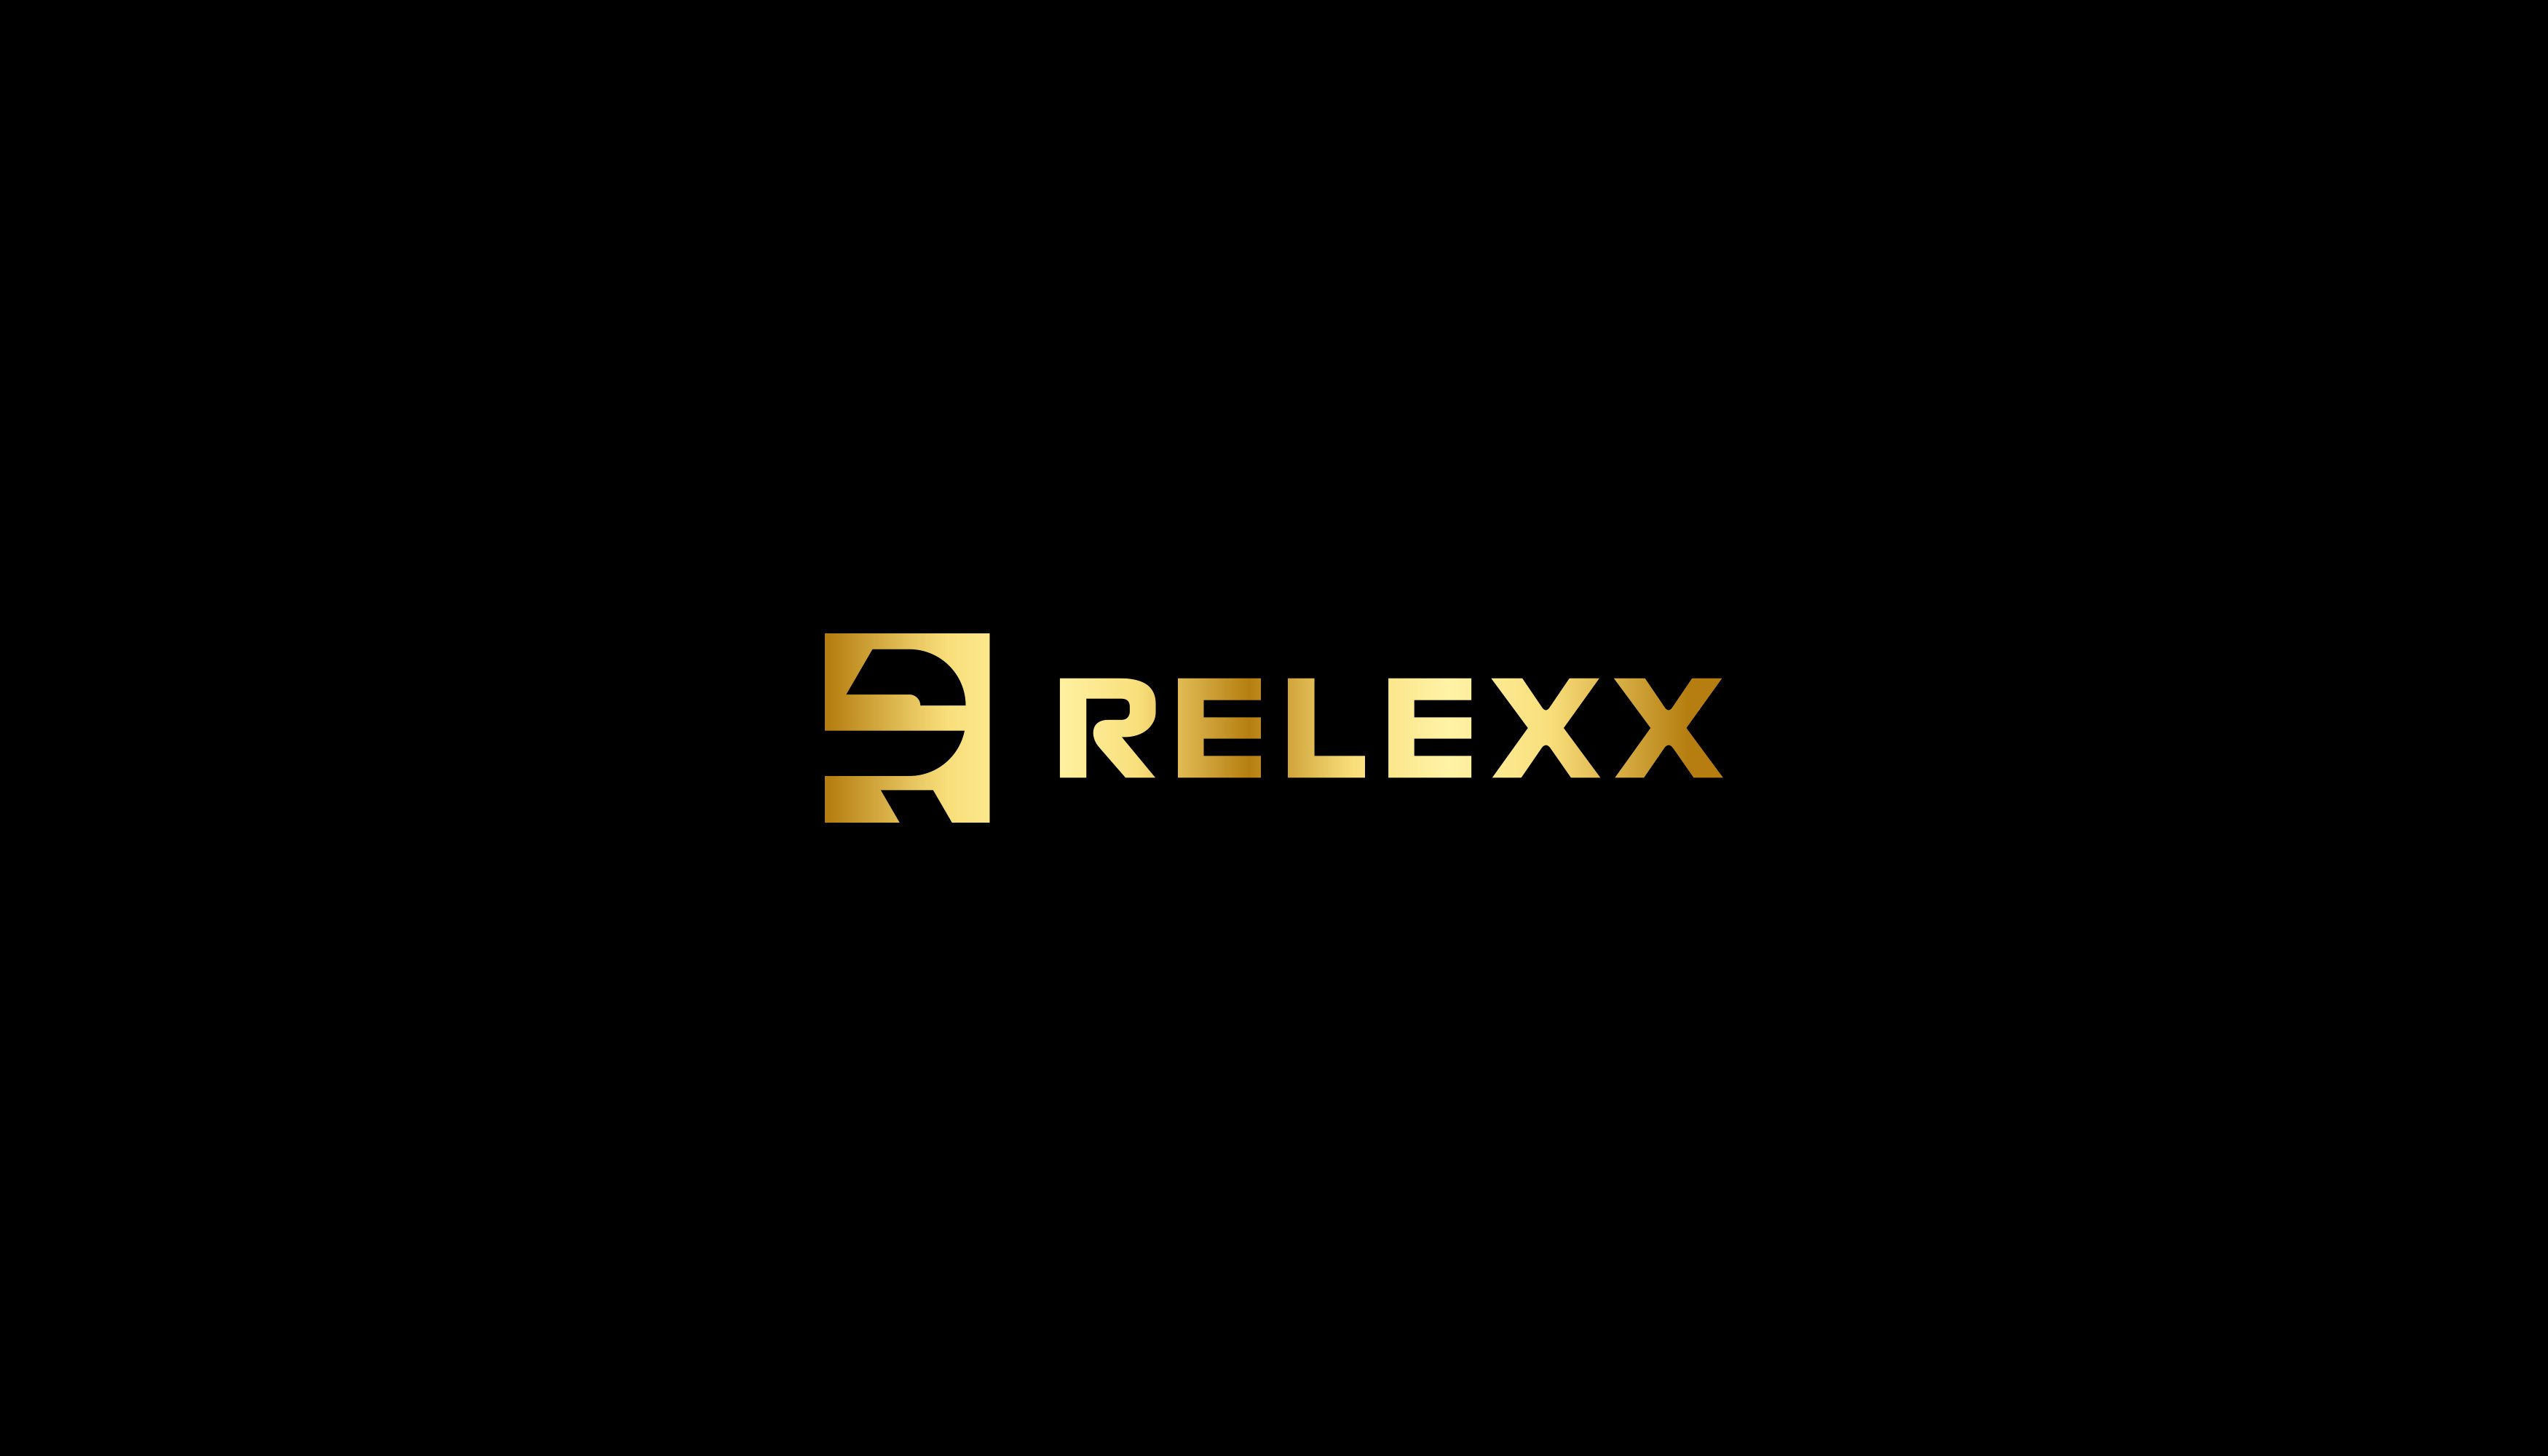 Relexx